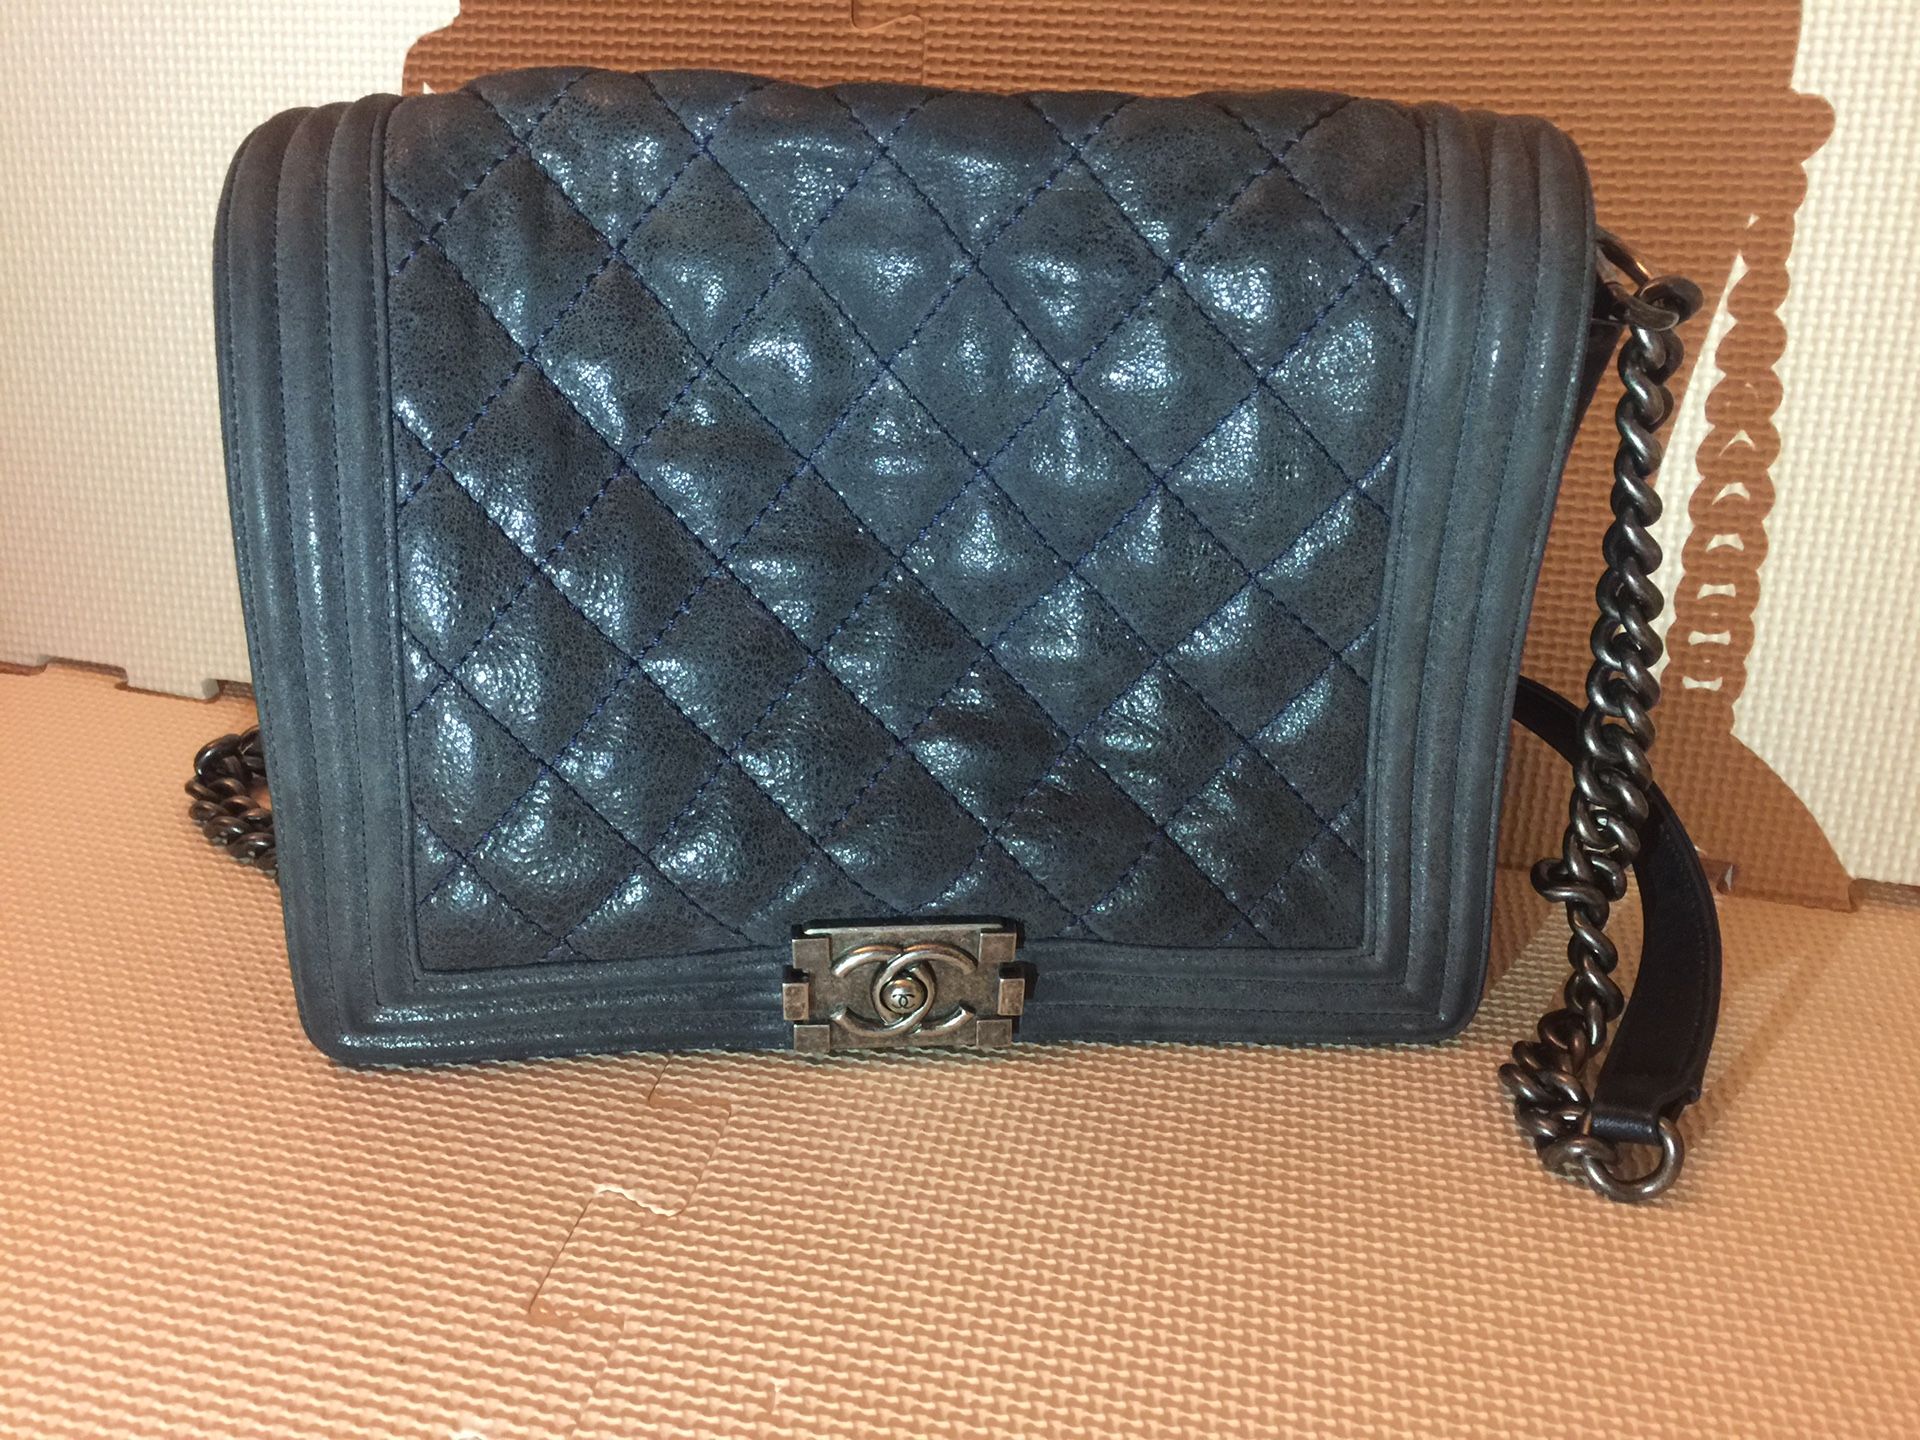 Boy Chanel handbag